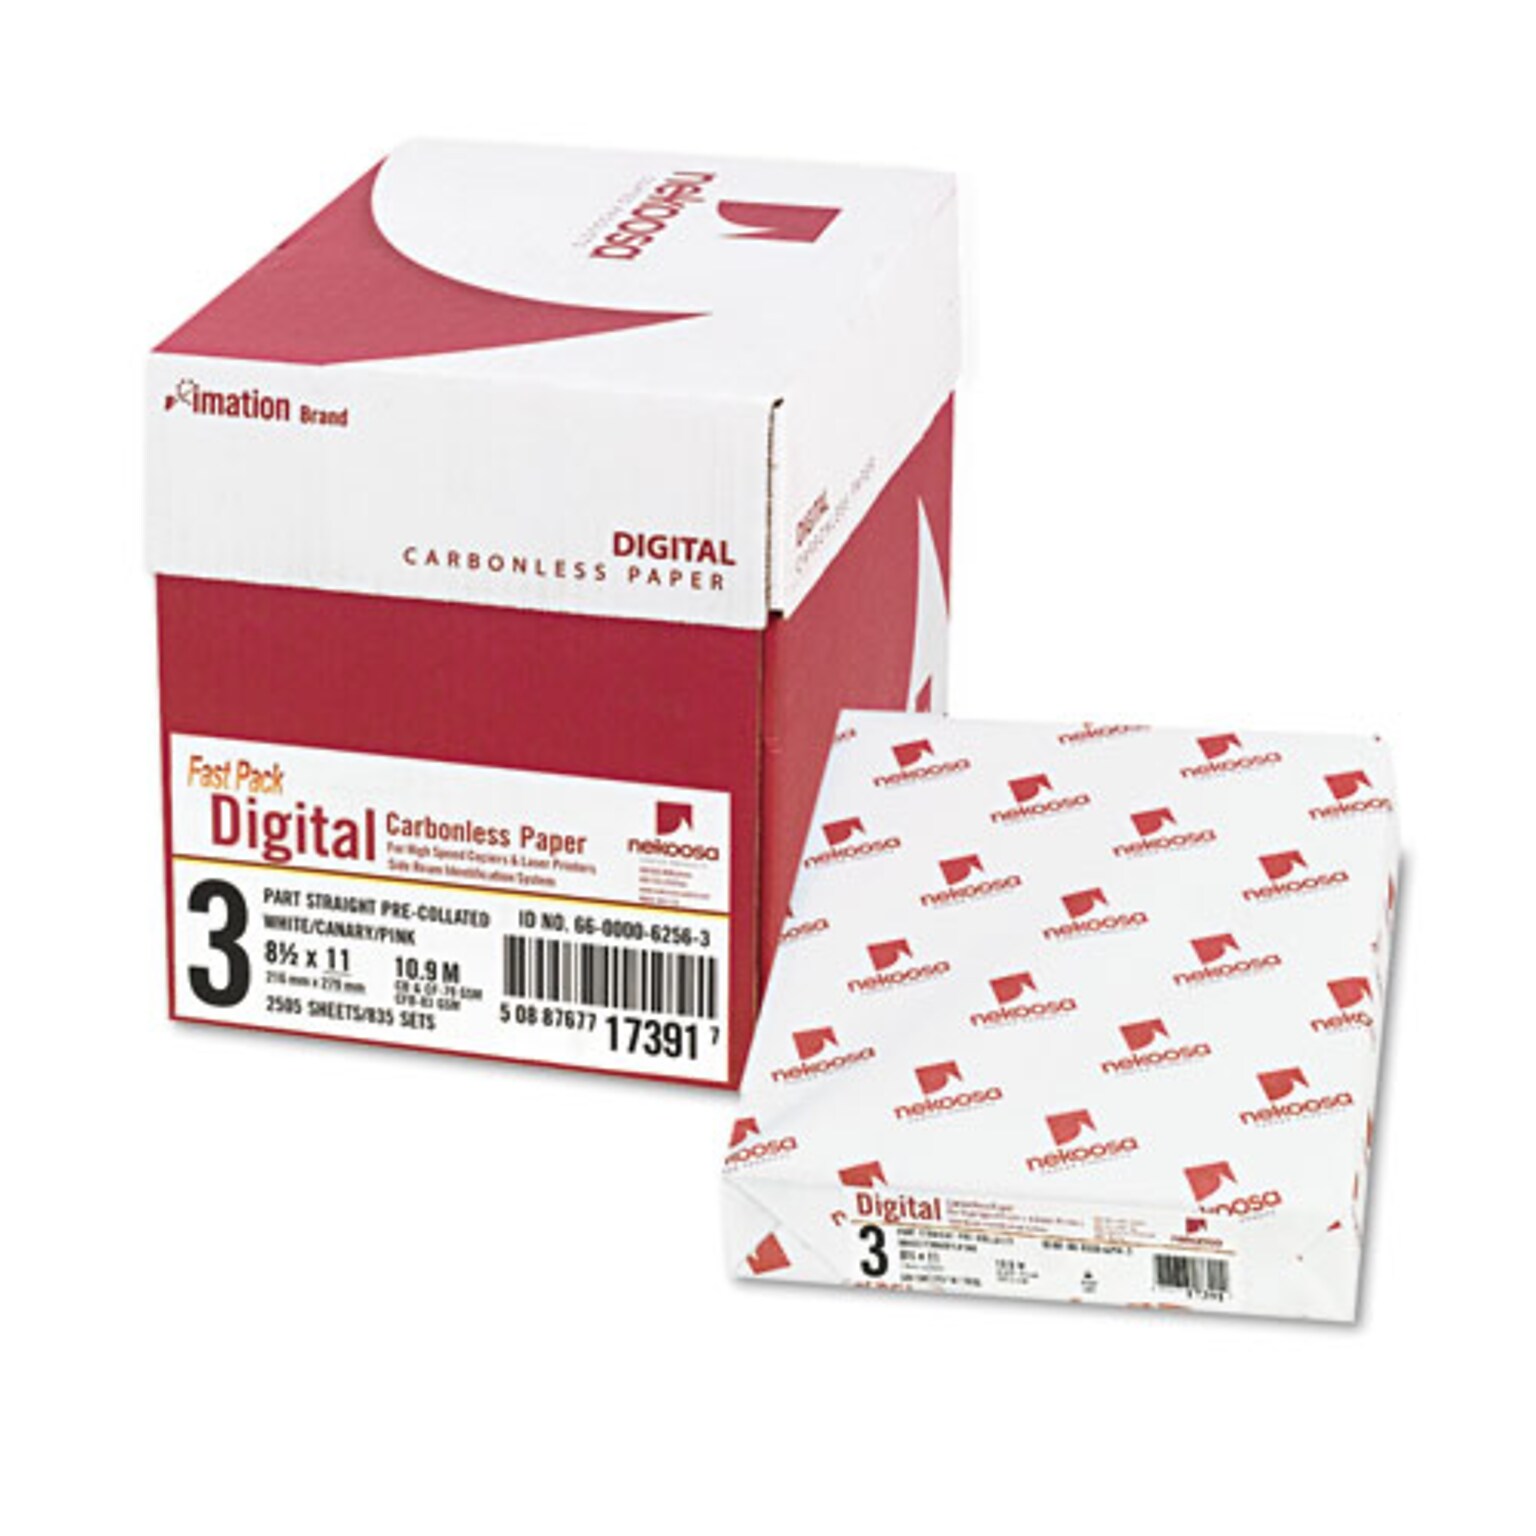 Nekoosa Fast Pack Digital Carbonless Paper, 8.5 x 11, White/Canary/Pink, 2500 Sheets/Carton (NEK17391)